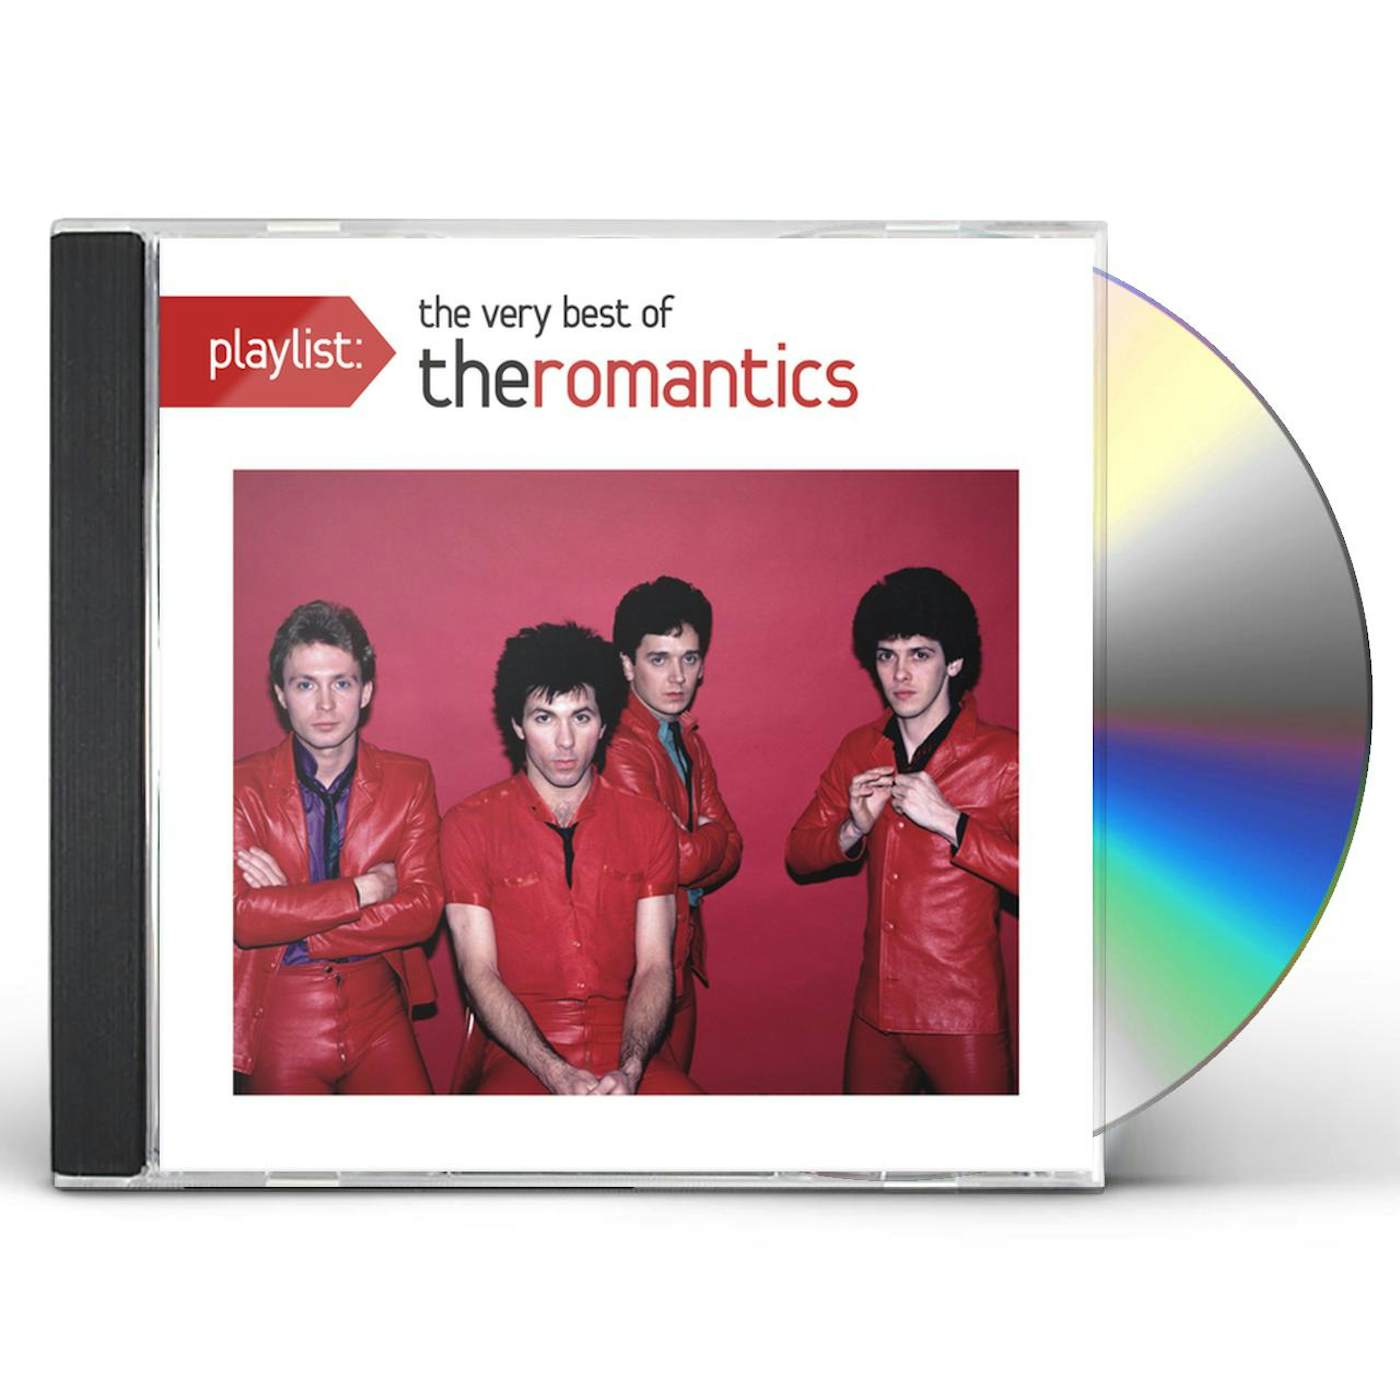 PLAYLIST: THE VERY BEST OF THE ROMANTICS CD